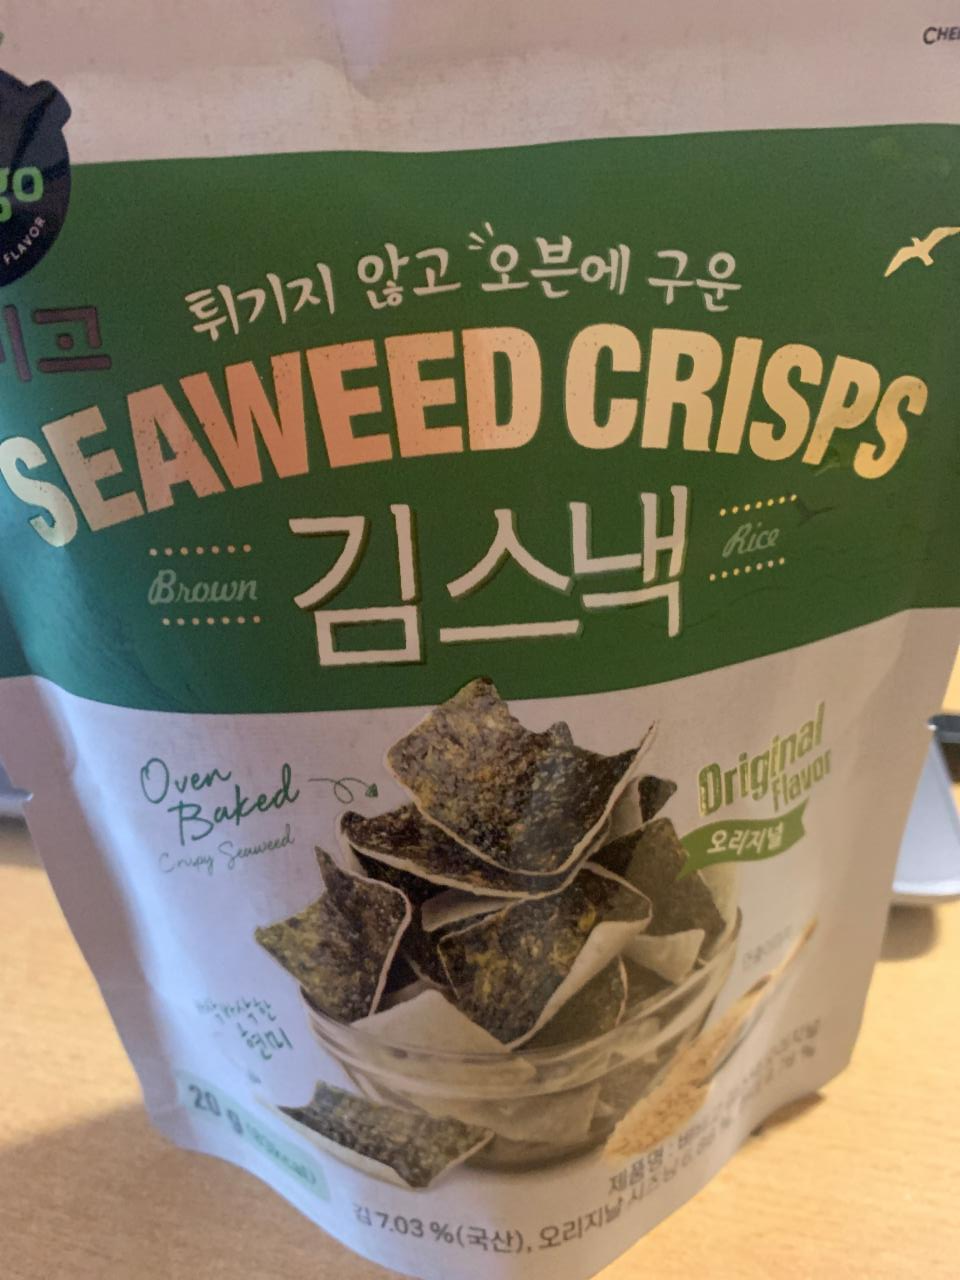 Fotografie - Seaweed Crisps Original Bibigo